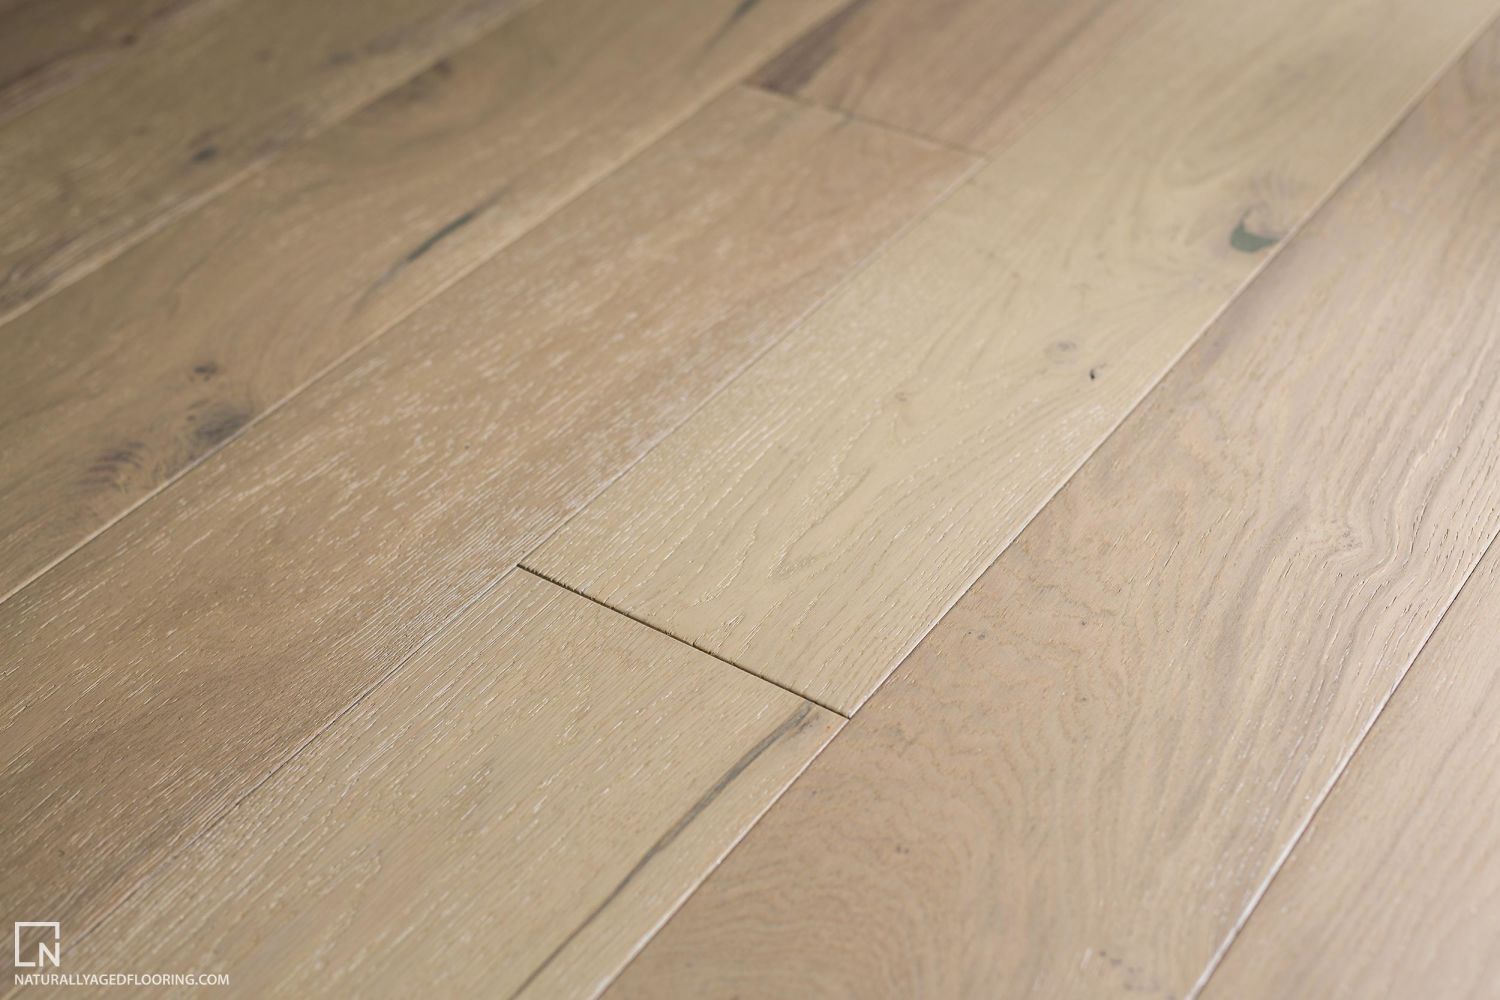 Naturally Aged Flooring Wirebrushed Series White Mist NA-WM-7.5